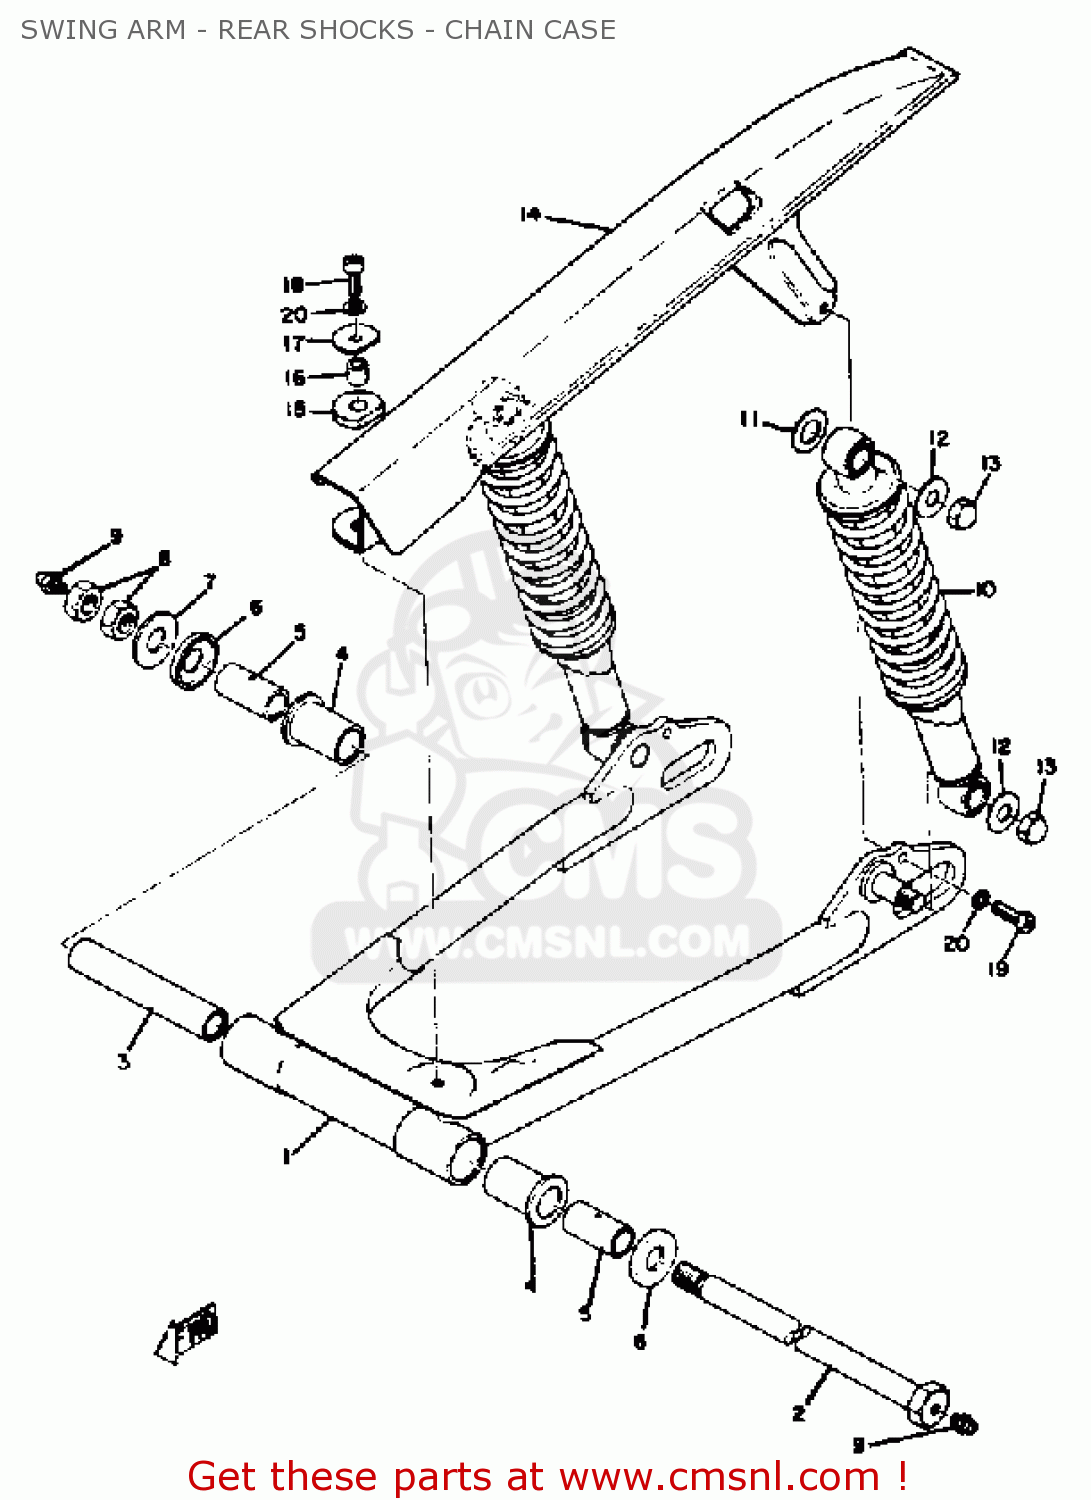 yamaha-rd350-1973-usa-swing-arm-rear-shocks-chain-case_bigyau0843d-4_a5a5.gif